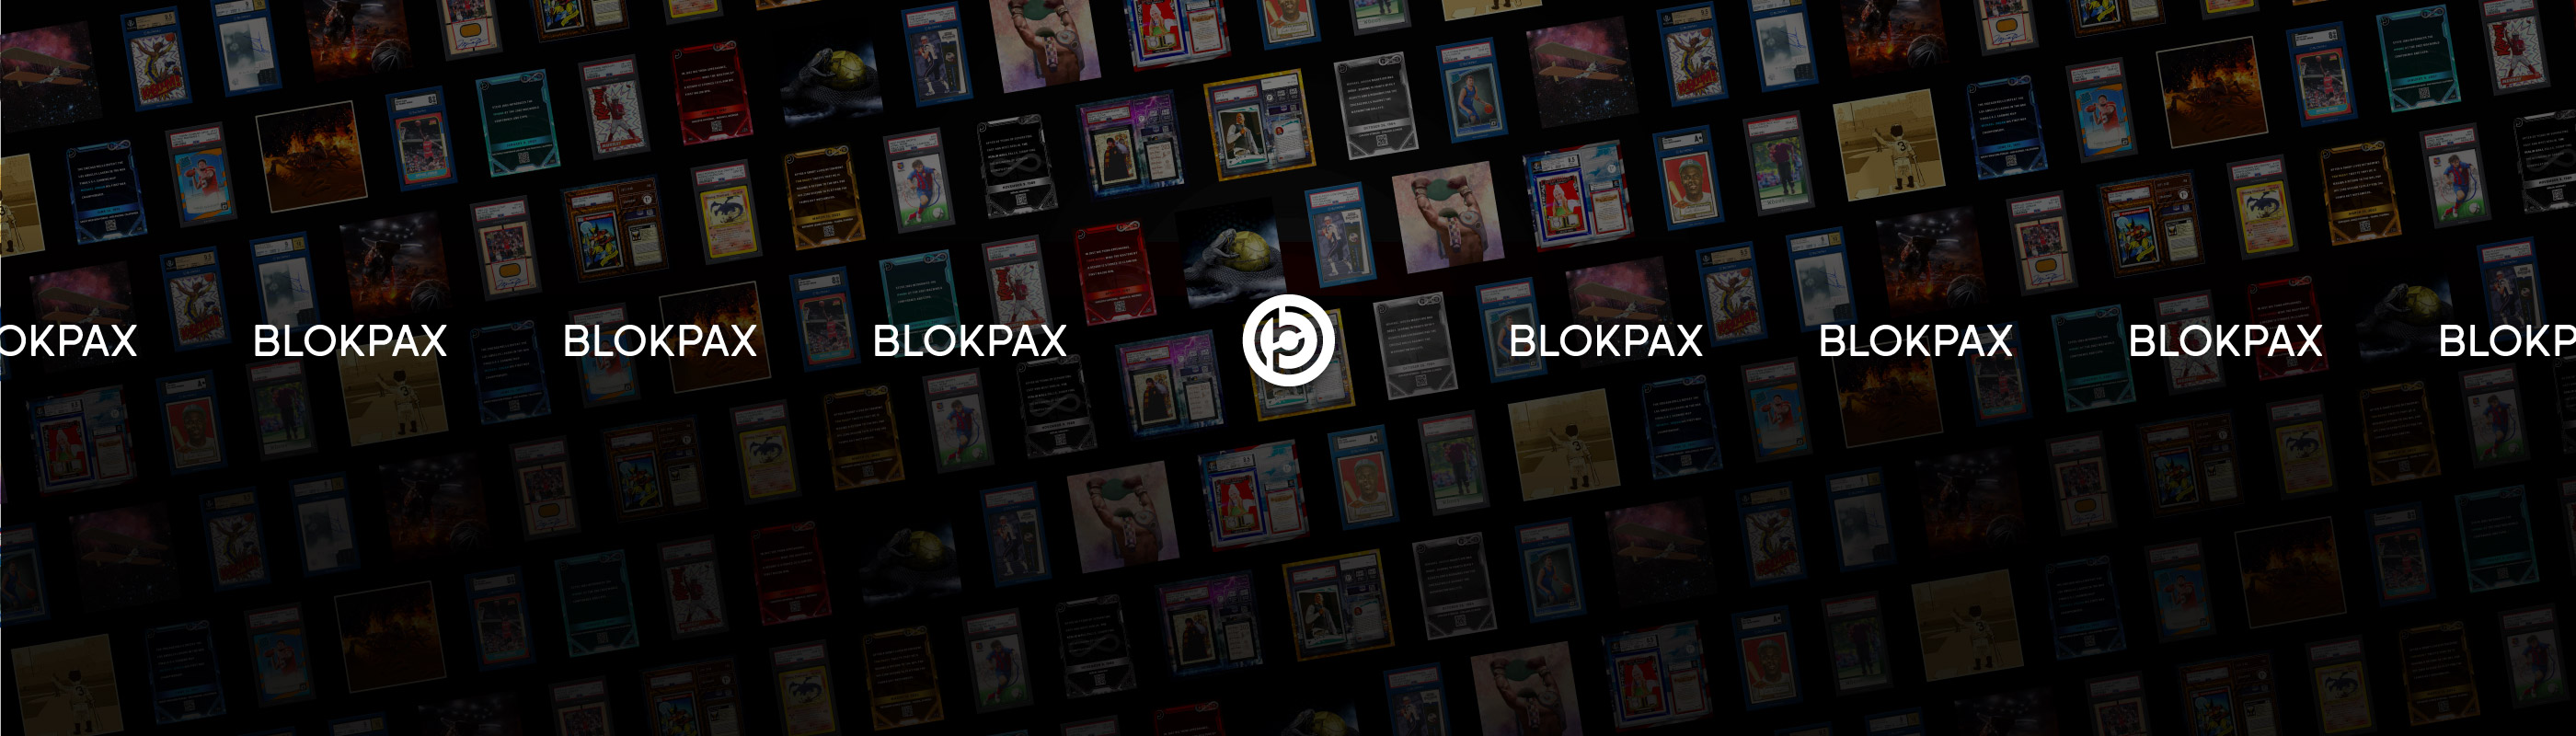 Blokpax バナー